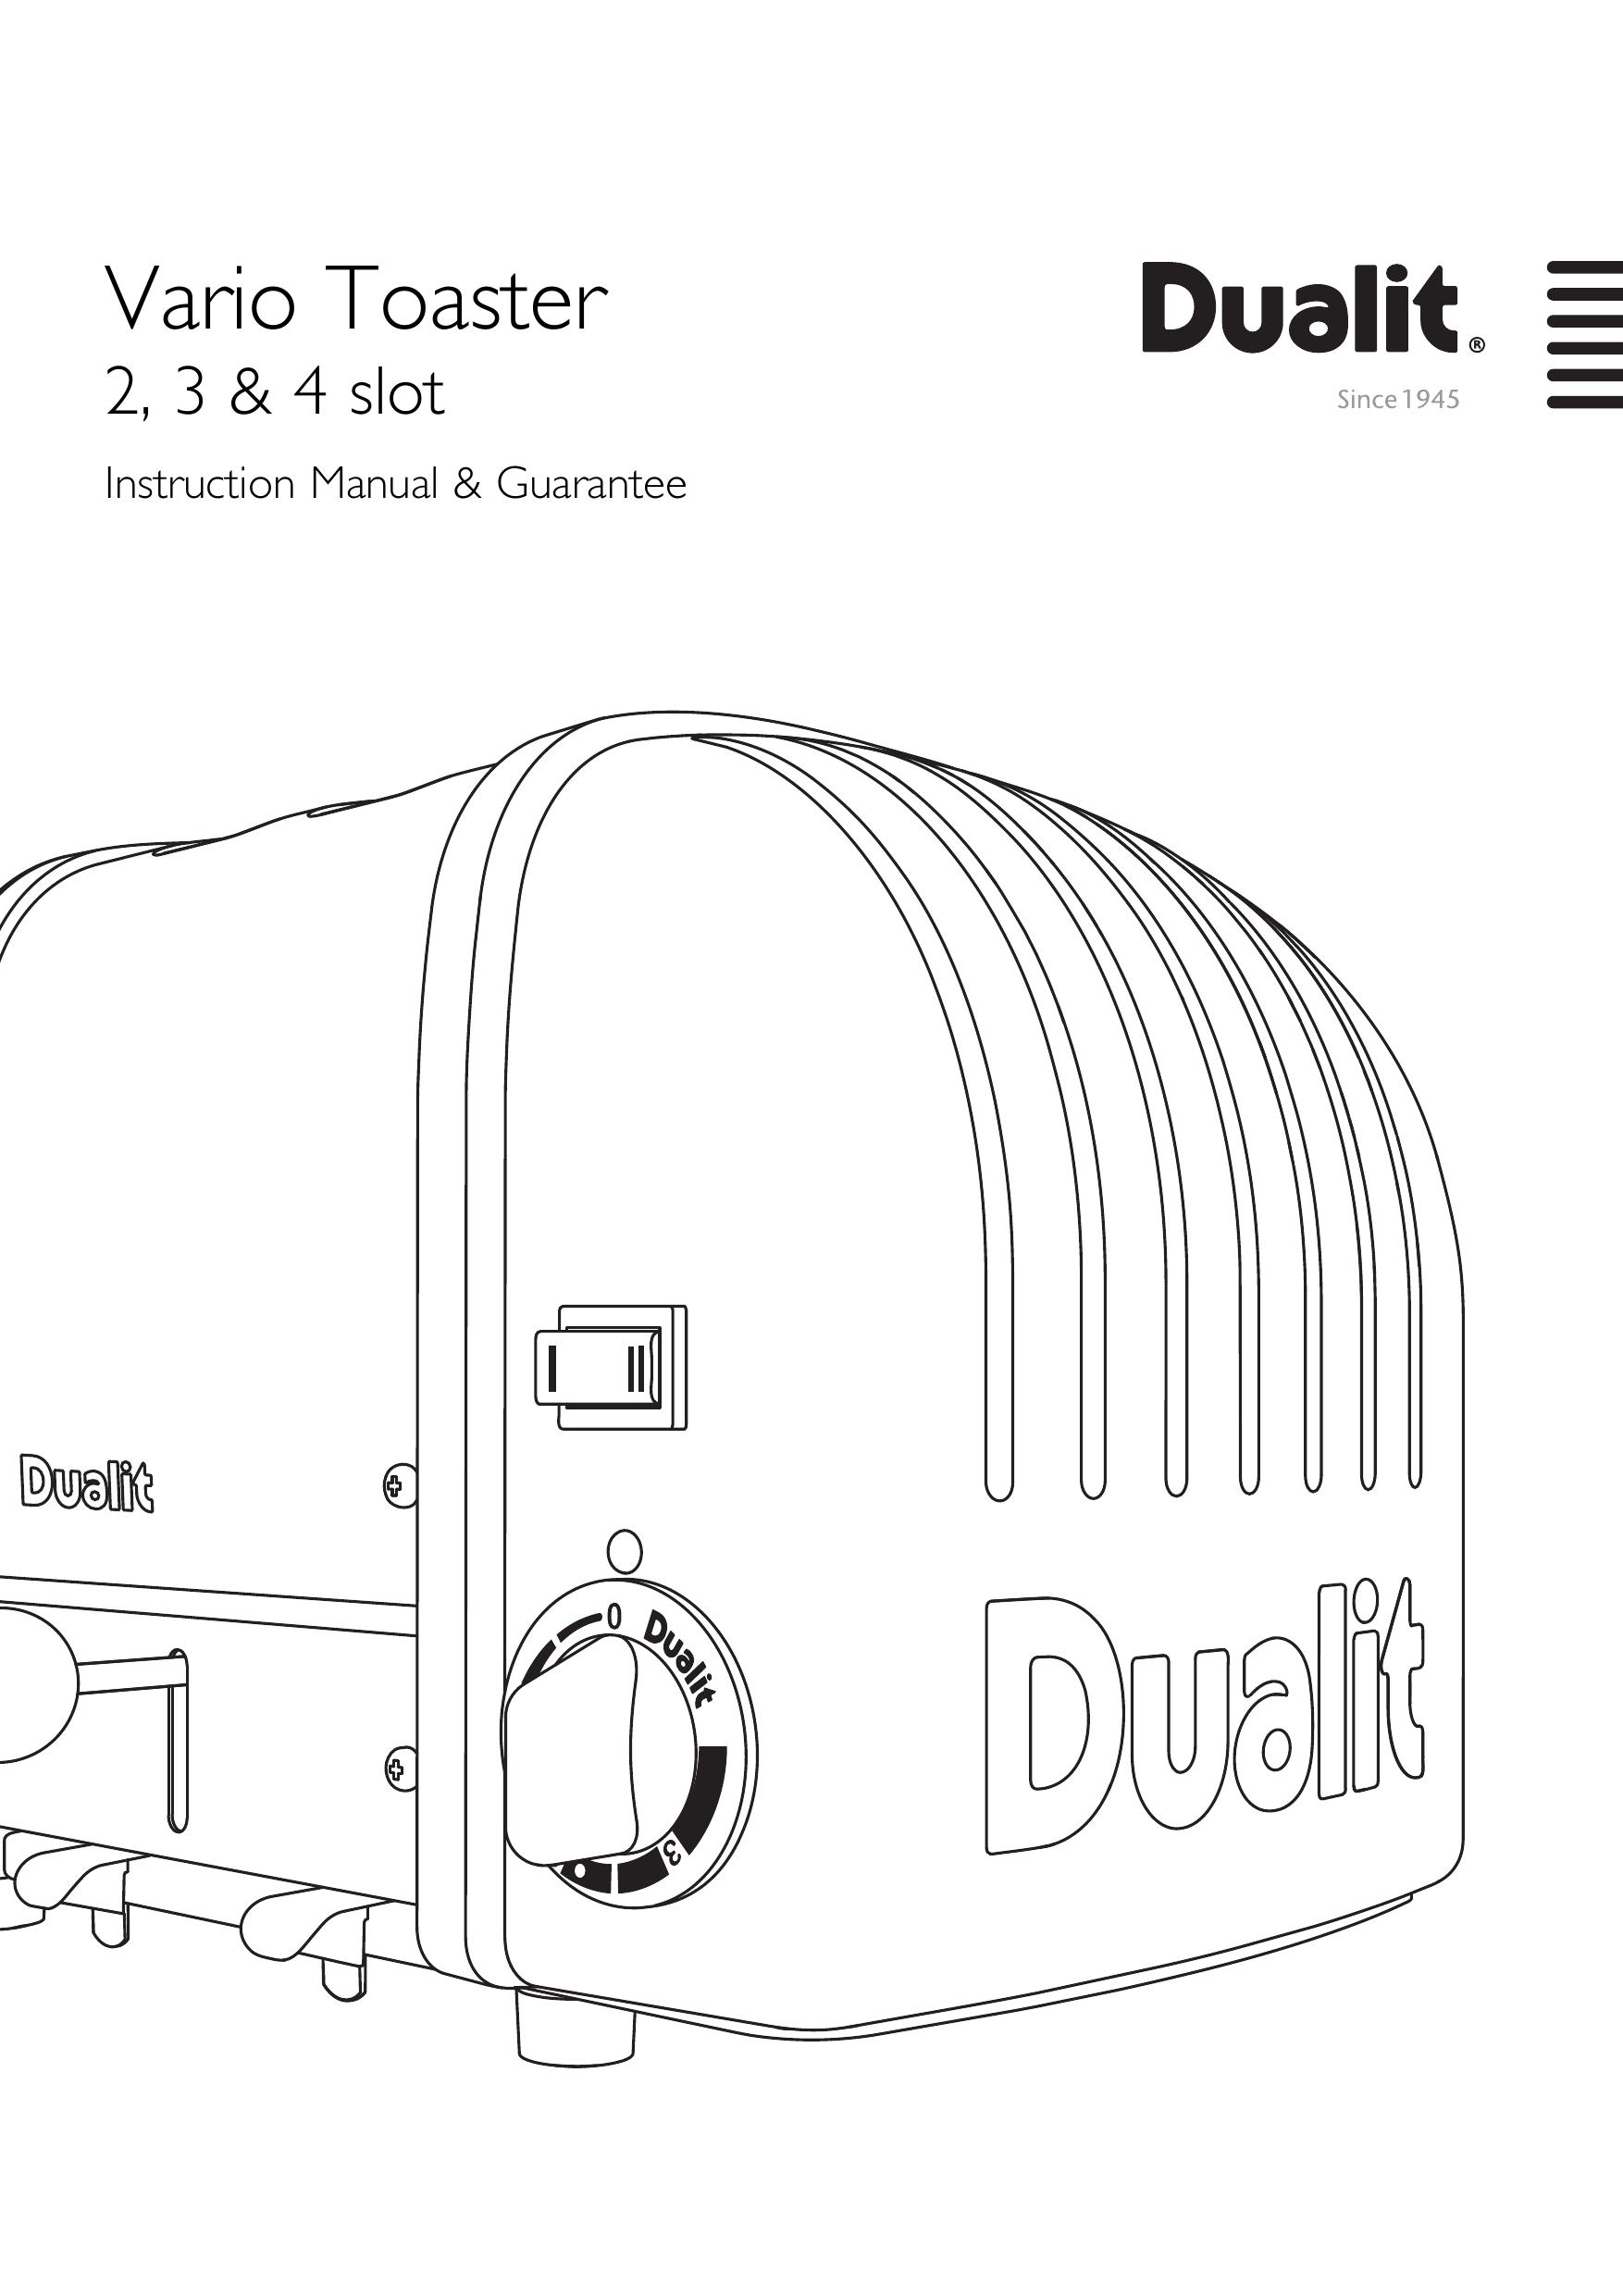 Dualit 27167 Toaster User Manual